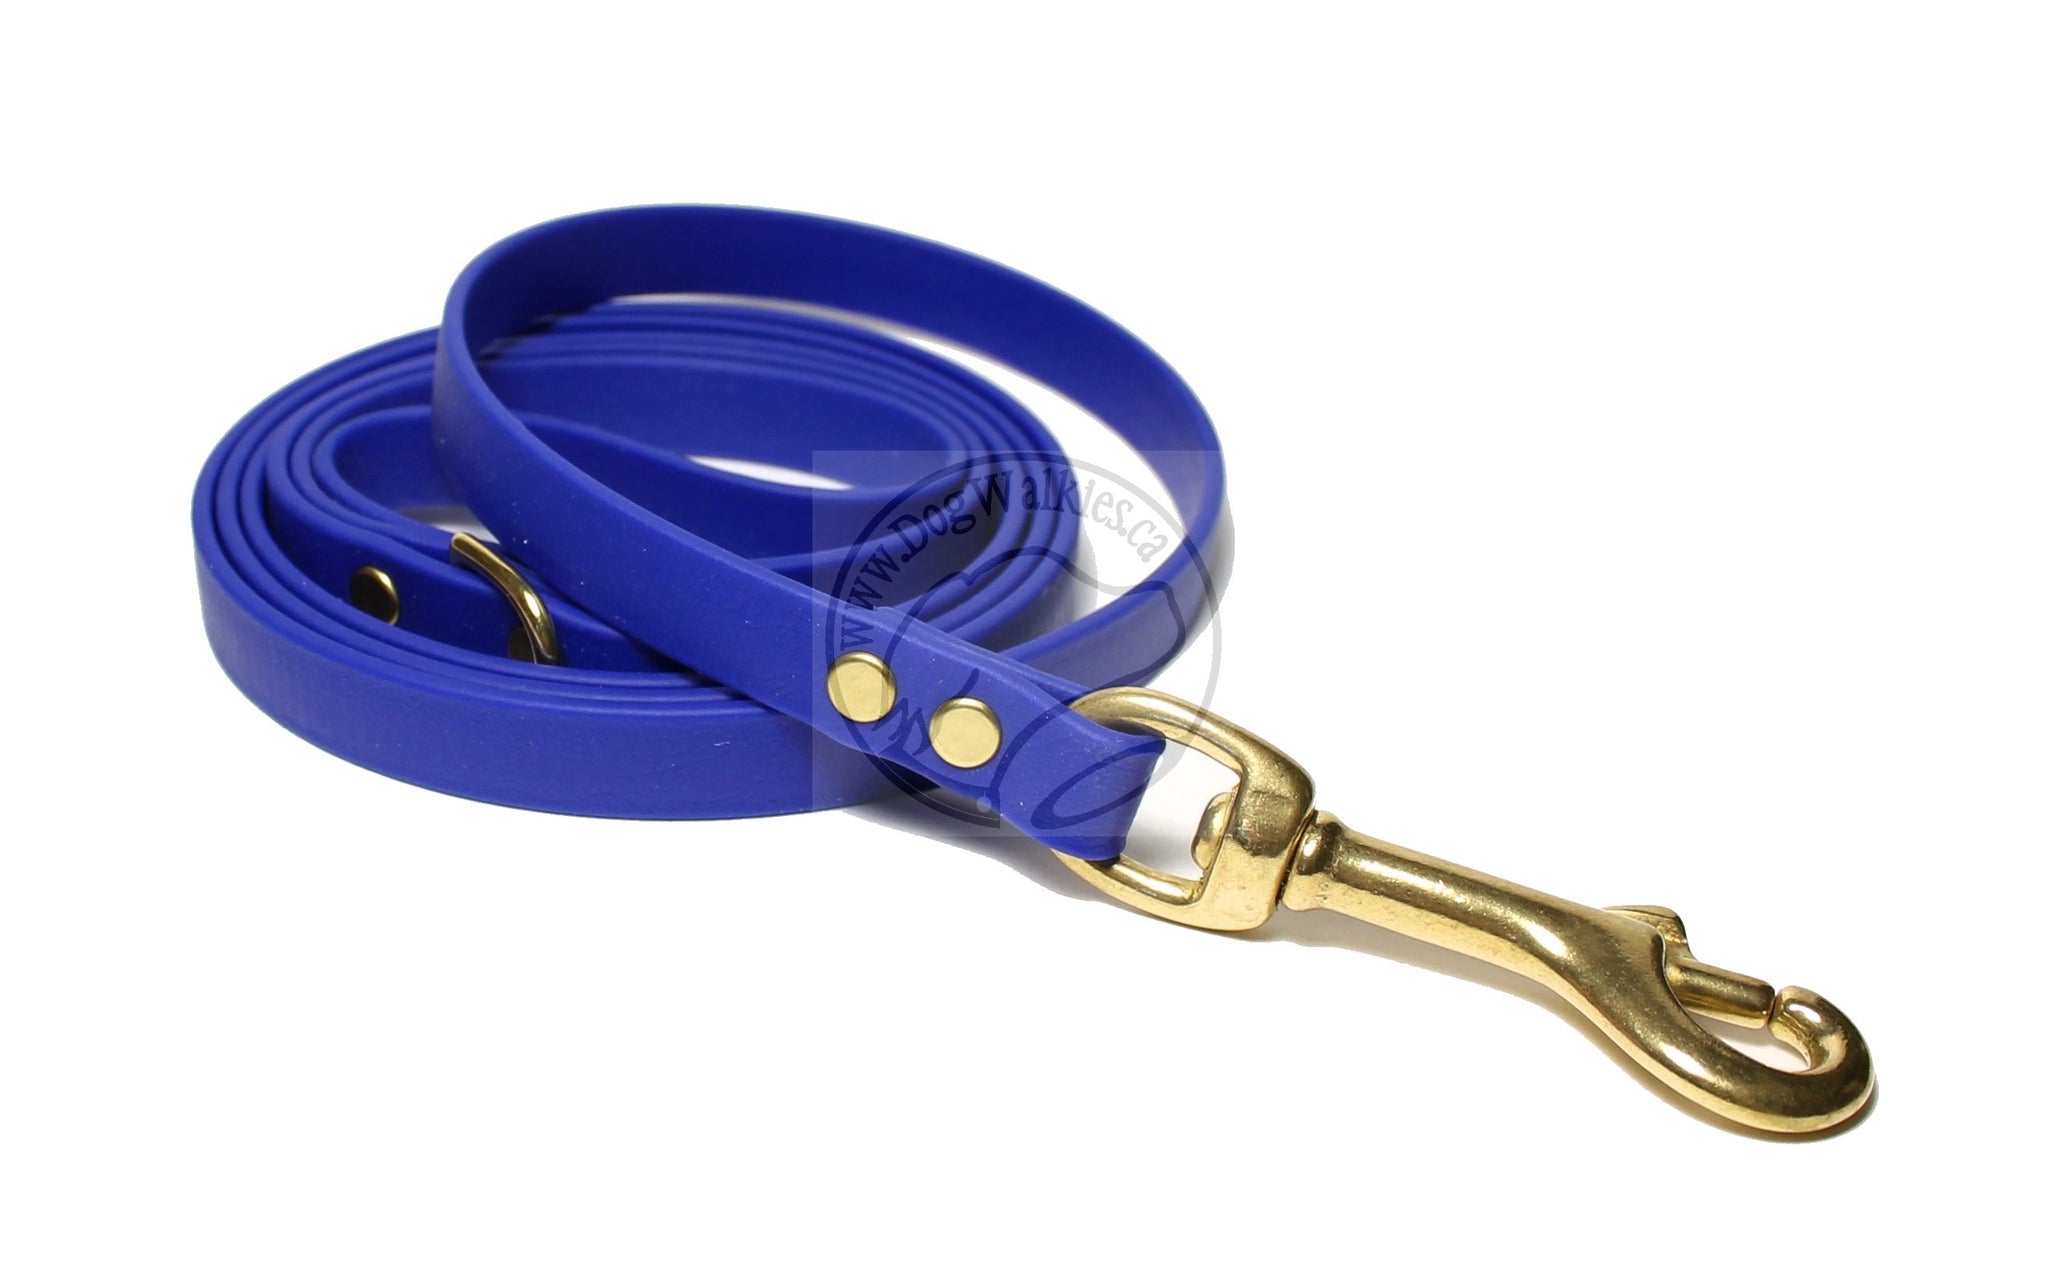 Royal Blue Biothane Small Dog Leash